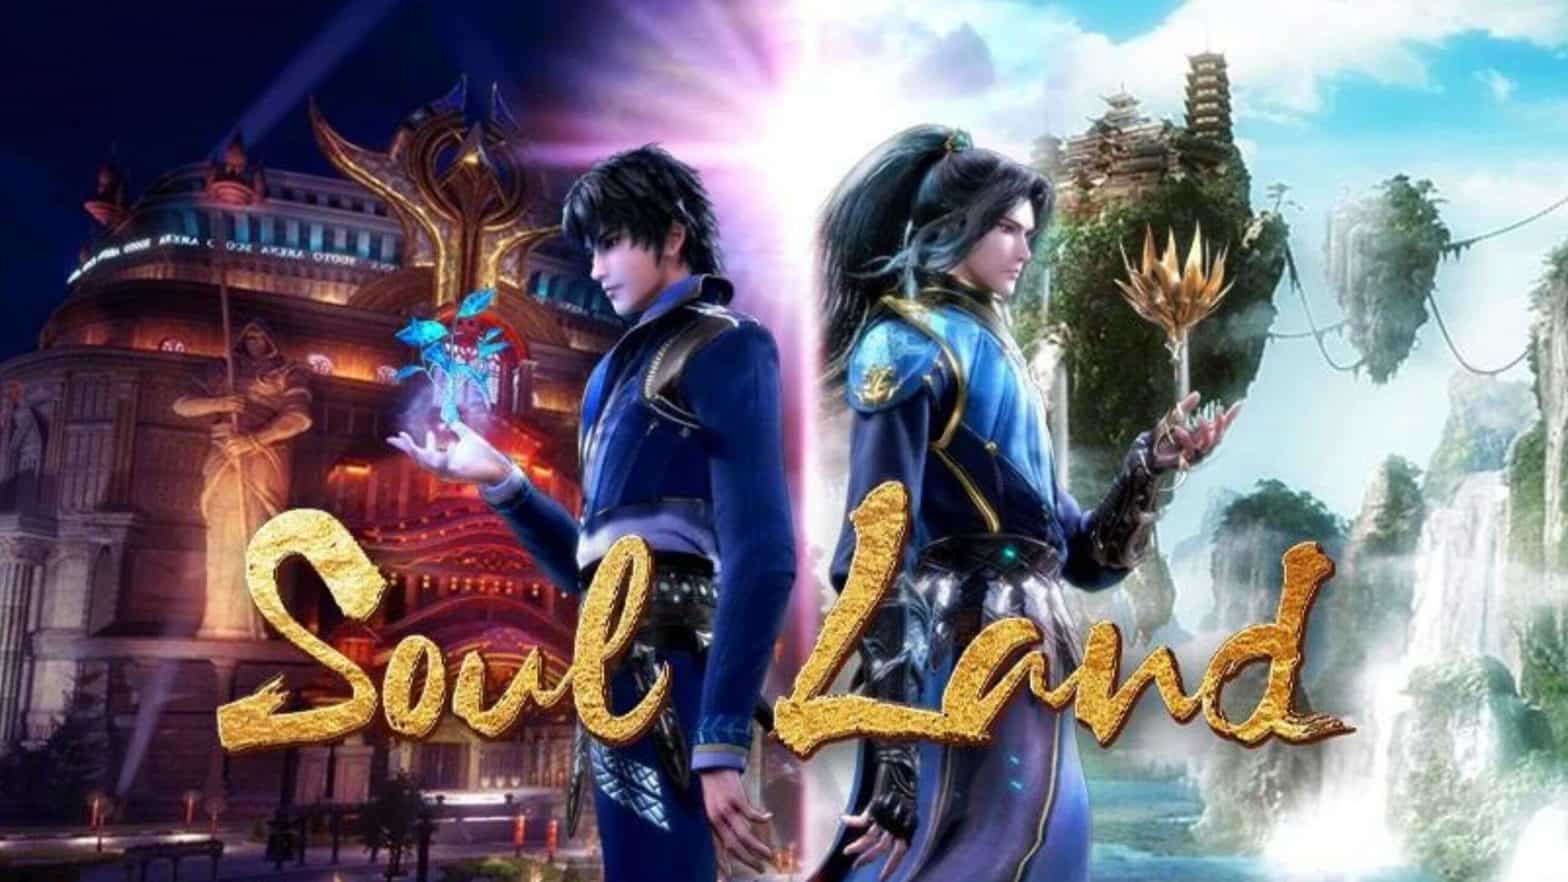 Soul Land Episode 264 Release Date